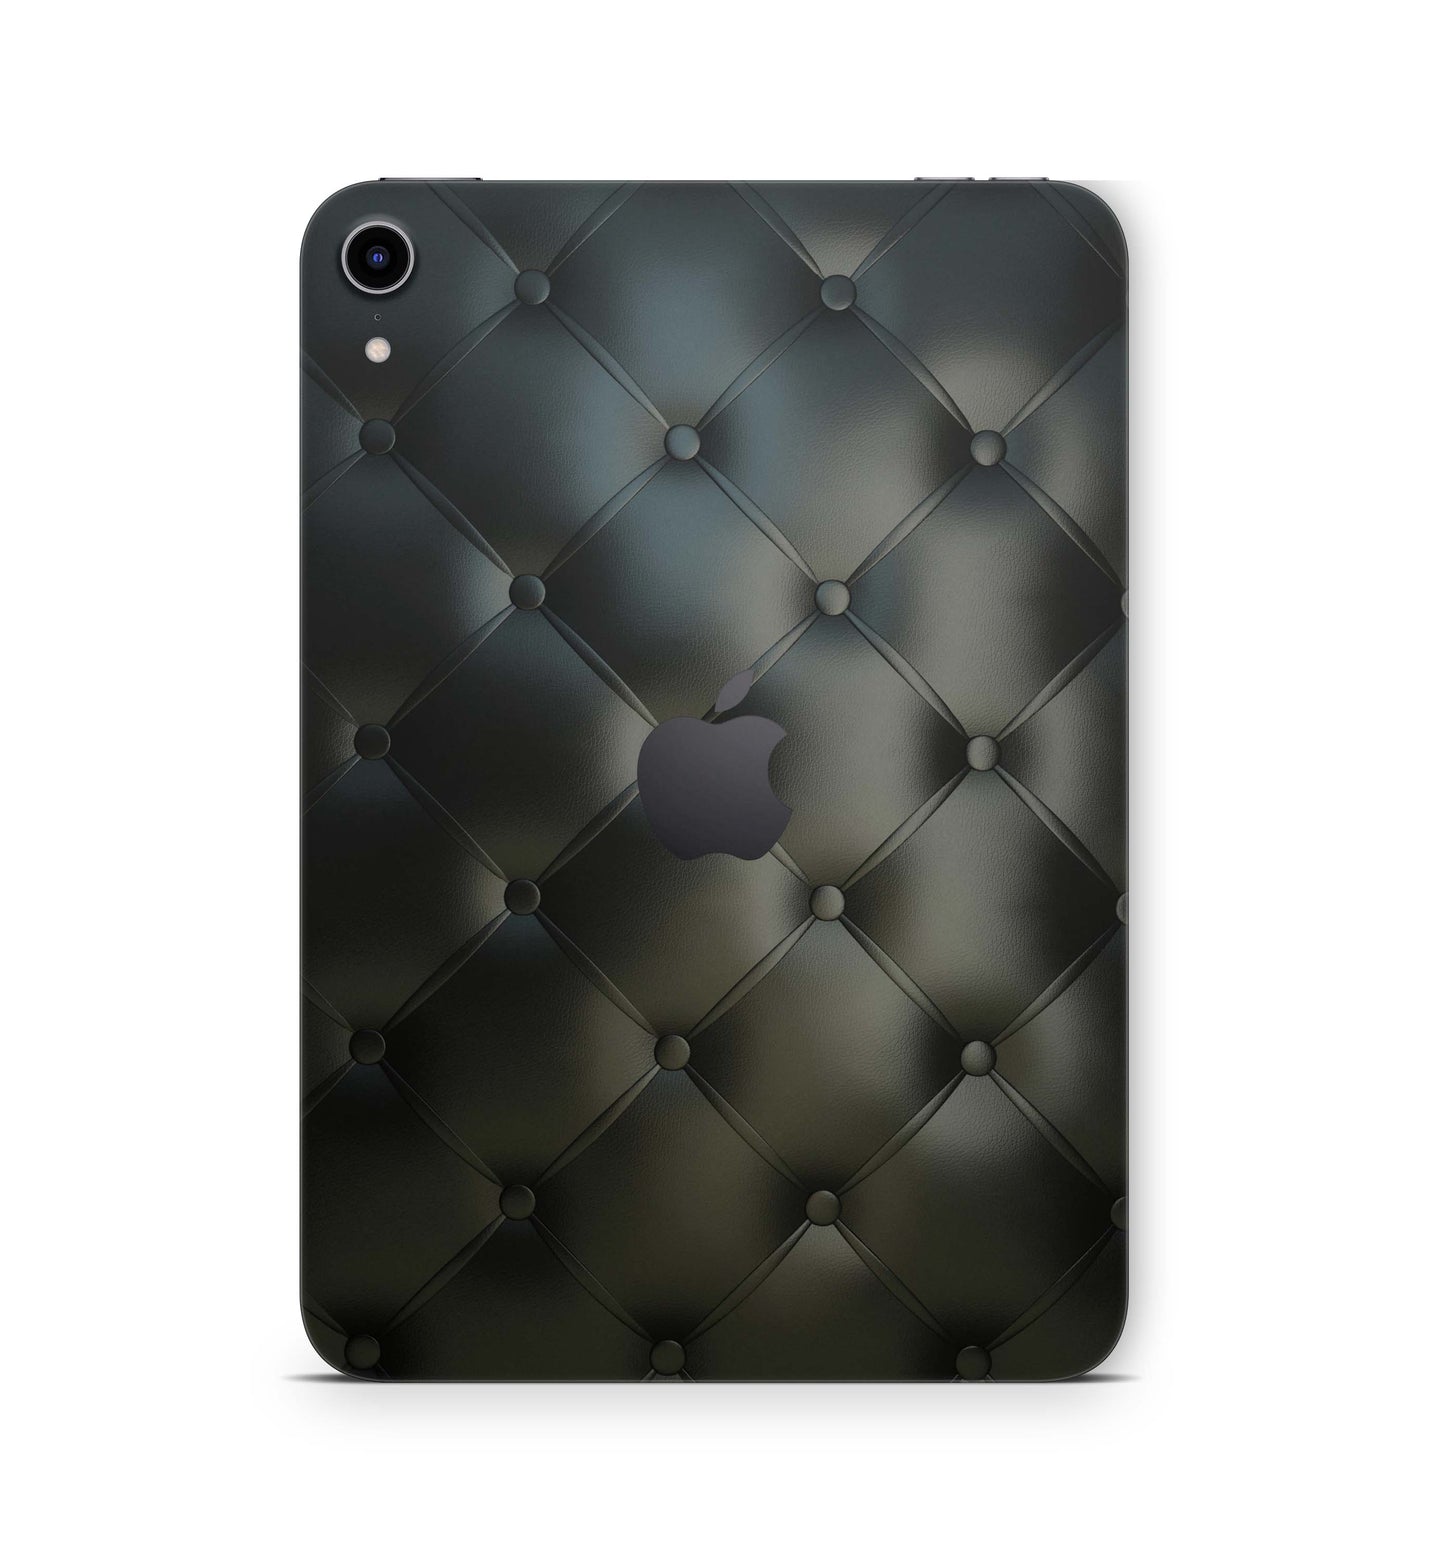 iPad Air Skin Design Cover Folie Vinyl Skins & Wraps für alle iPad Air Modelle Aufkleber Skins4u Ledersofa  